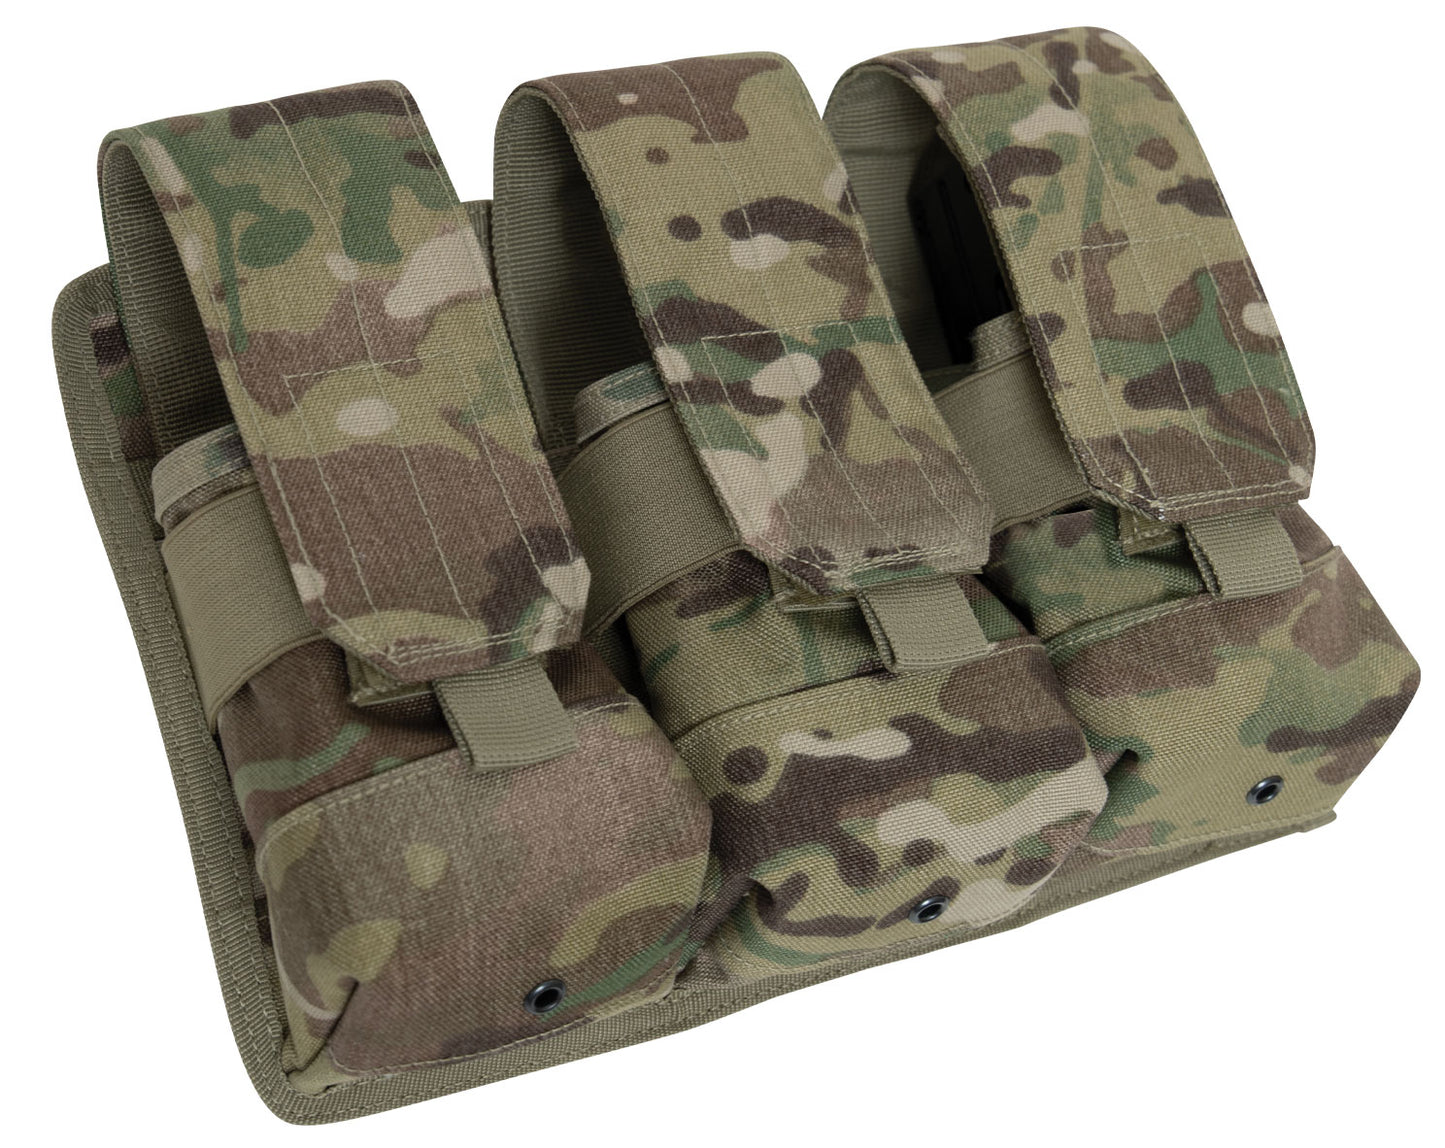 Milspec Universal Triple Mag Rifle Pouch New Arrivals MilTac Tactical Military Outdoor Gear Australia